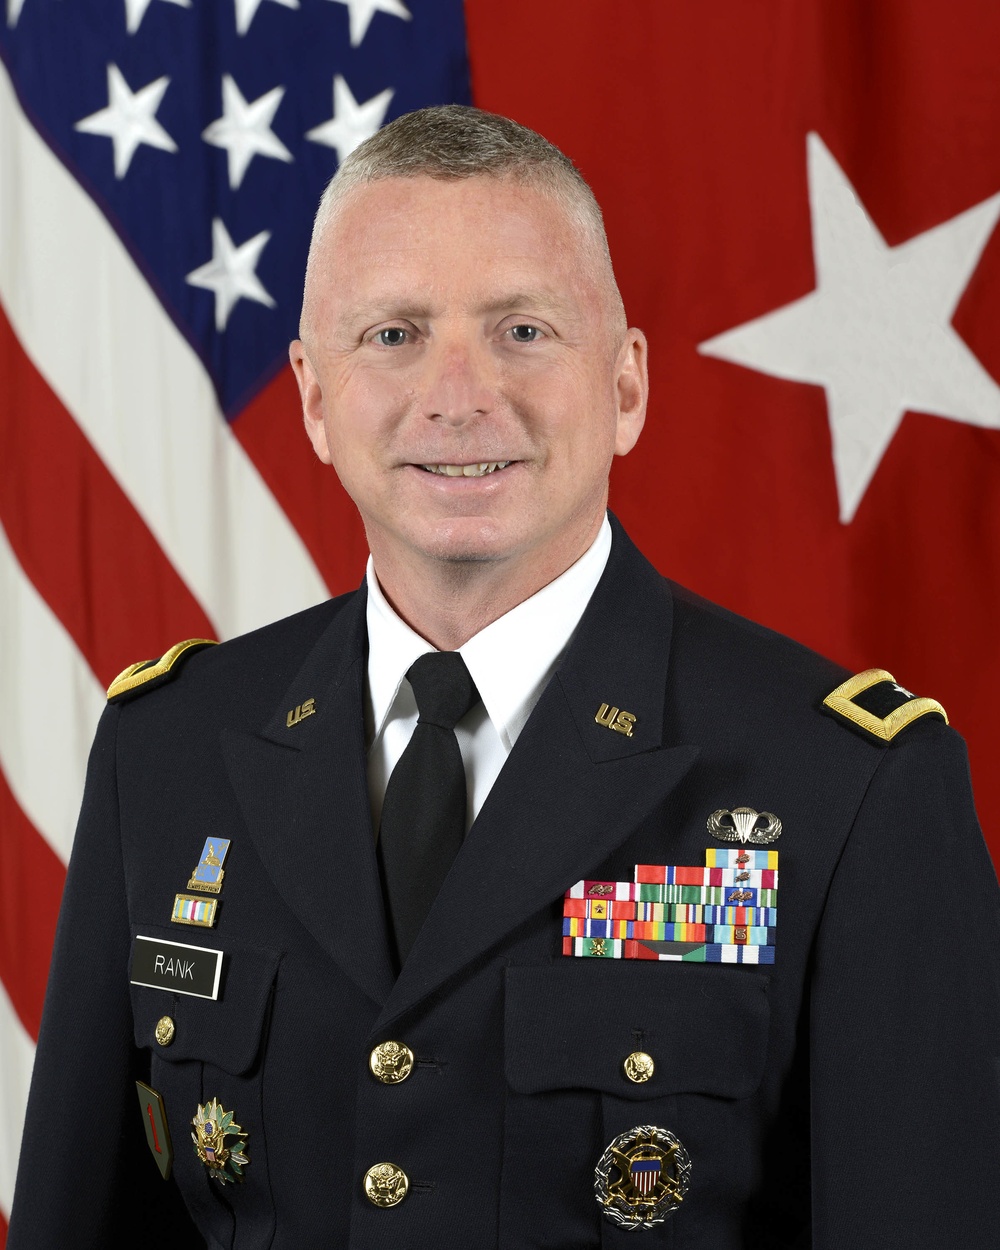 U.S. Army Brig. Gen. Joseph W. Rank